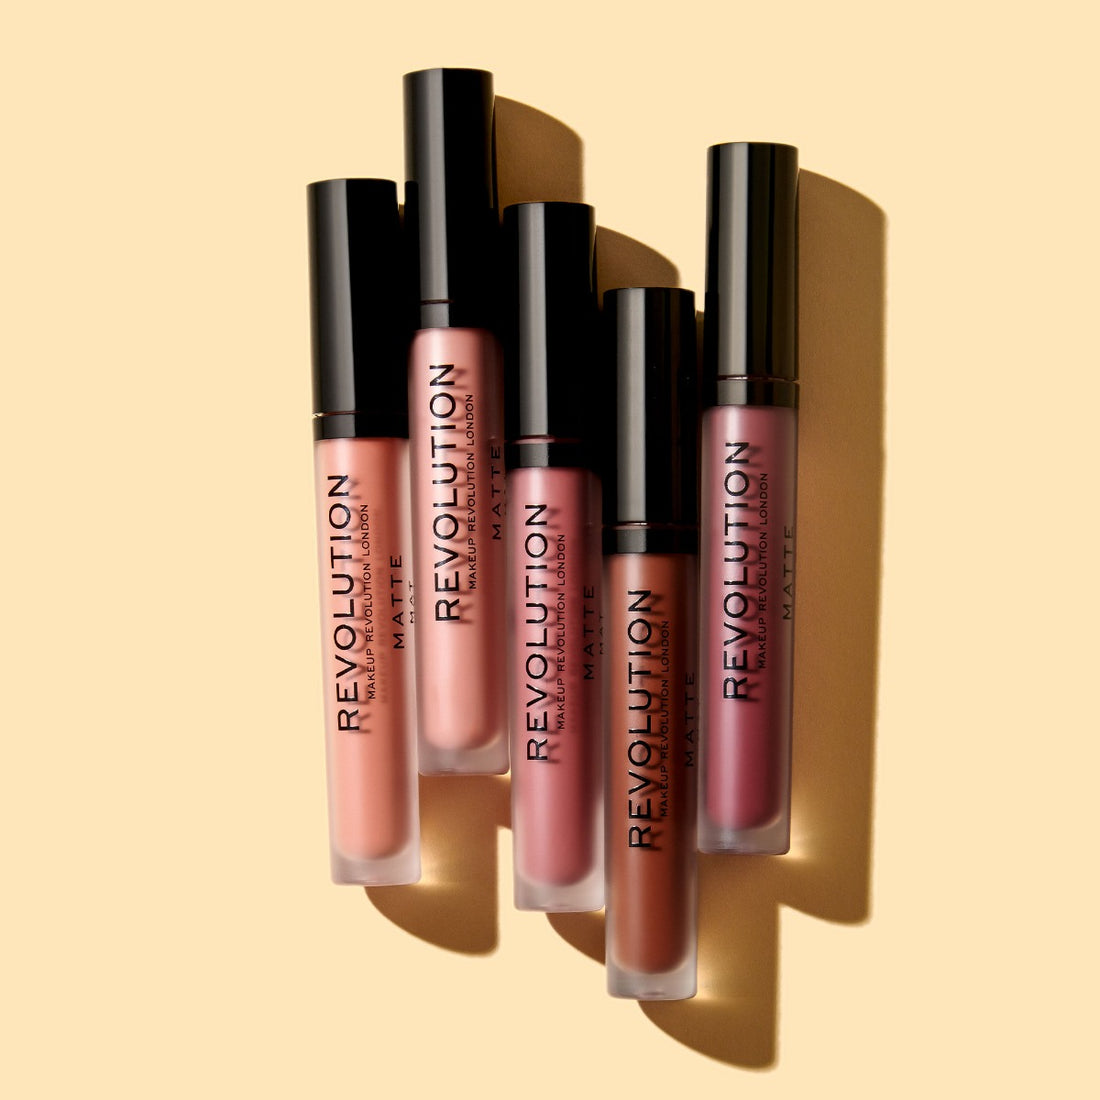 Makeup Revolution Matte Liquid Lipstick